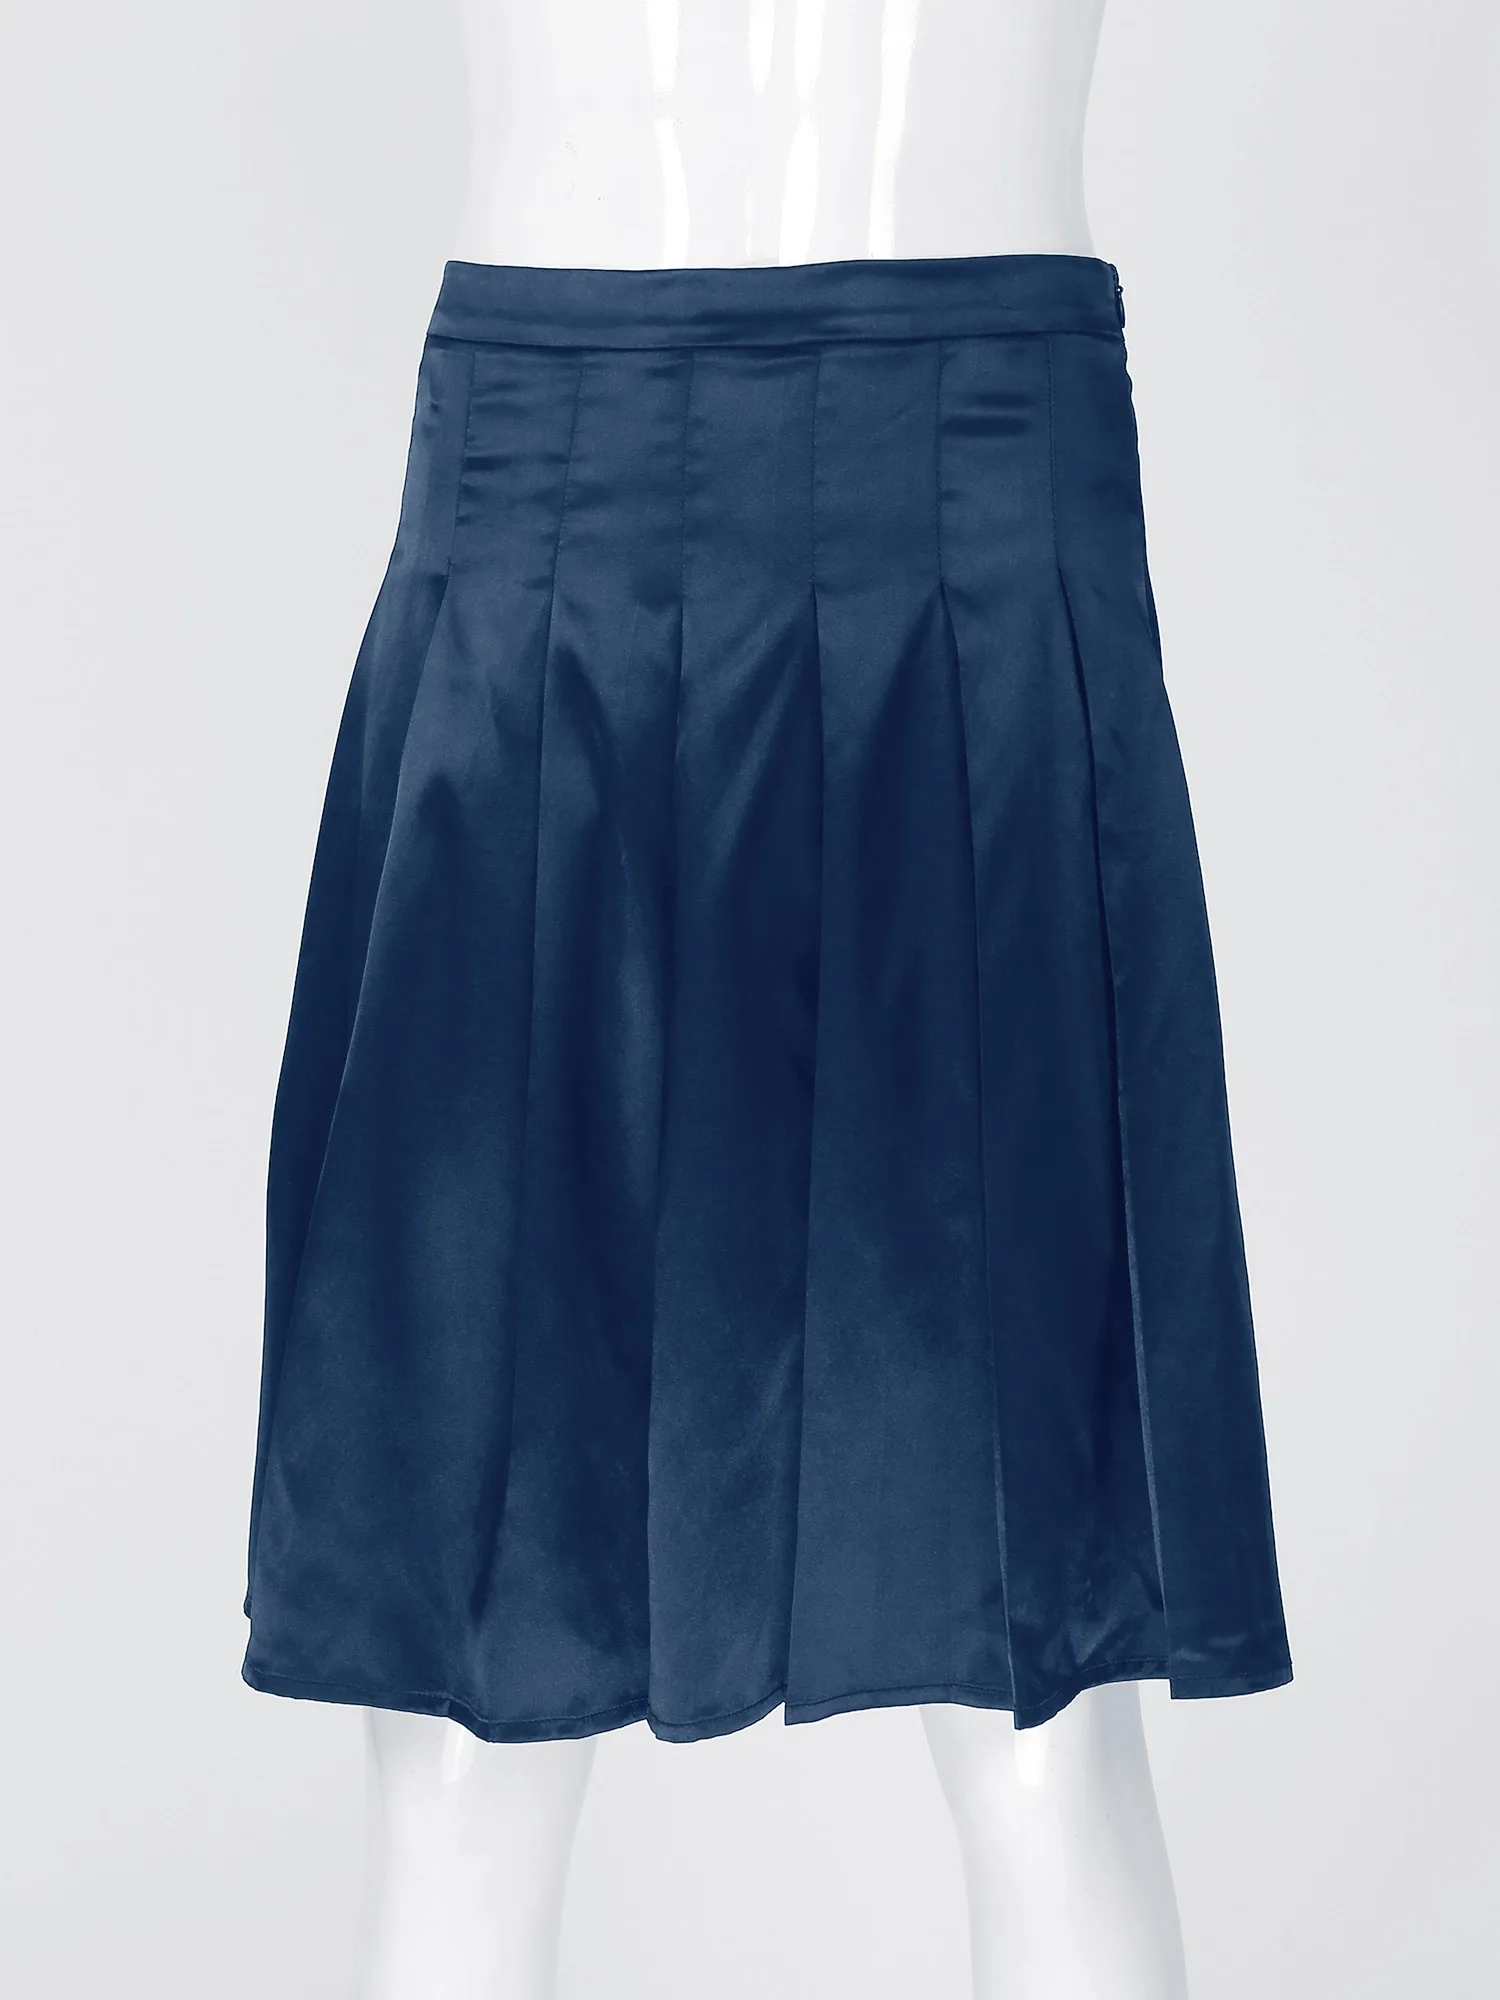 Gay Mens Satin Skirt Sissy Zipper Back Roleplay Short Midi Skirt Nightwear Sleepwear Loungewear mens loungewear sets